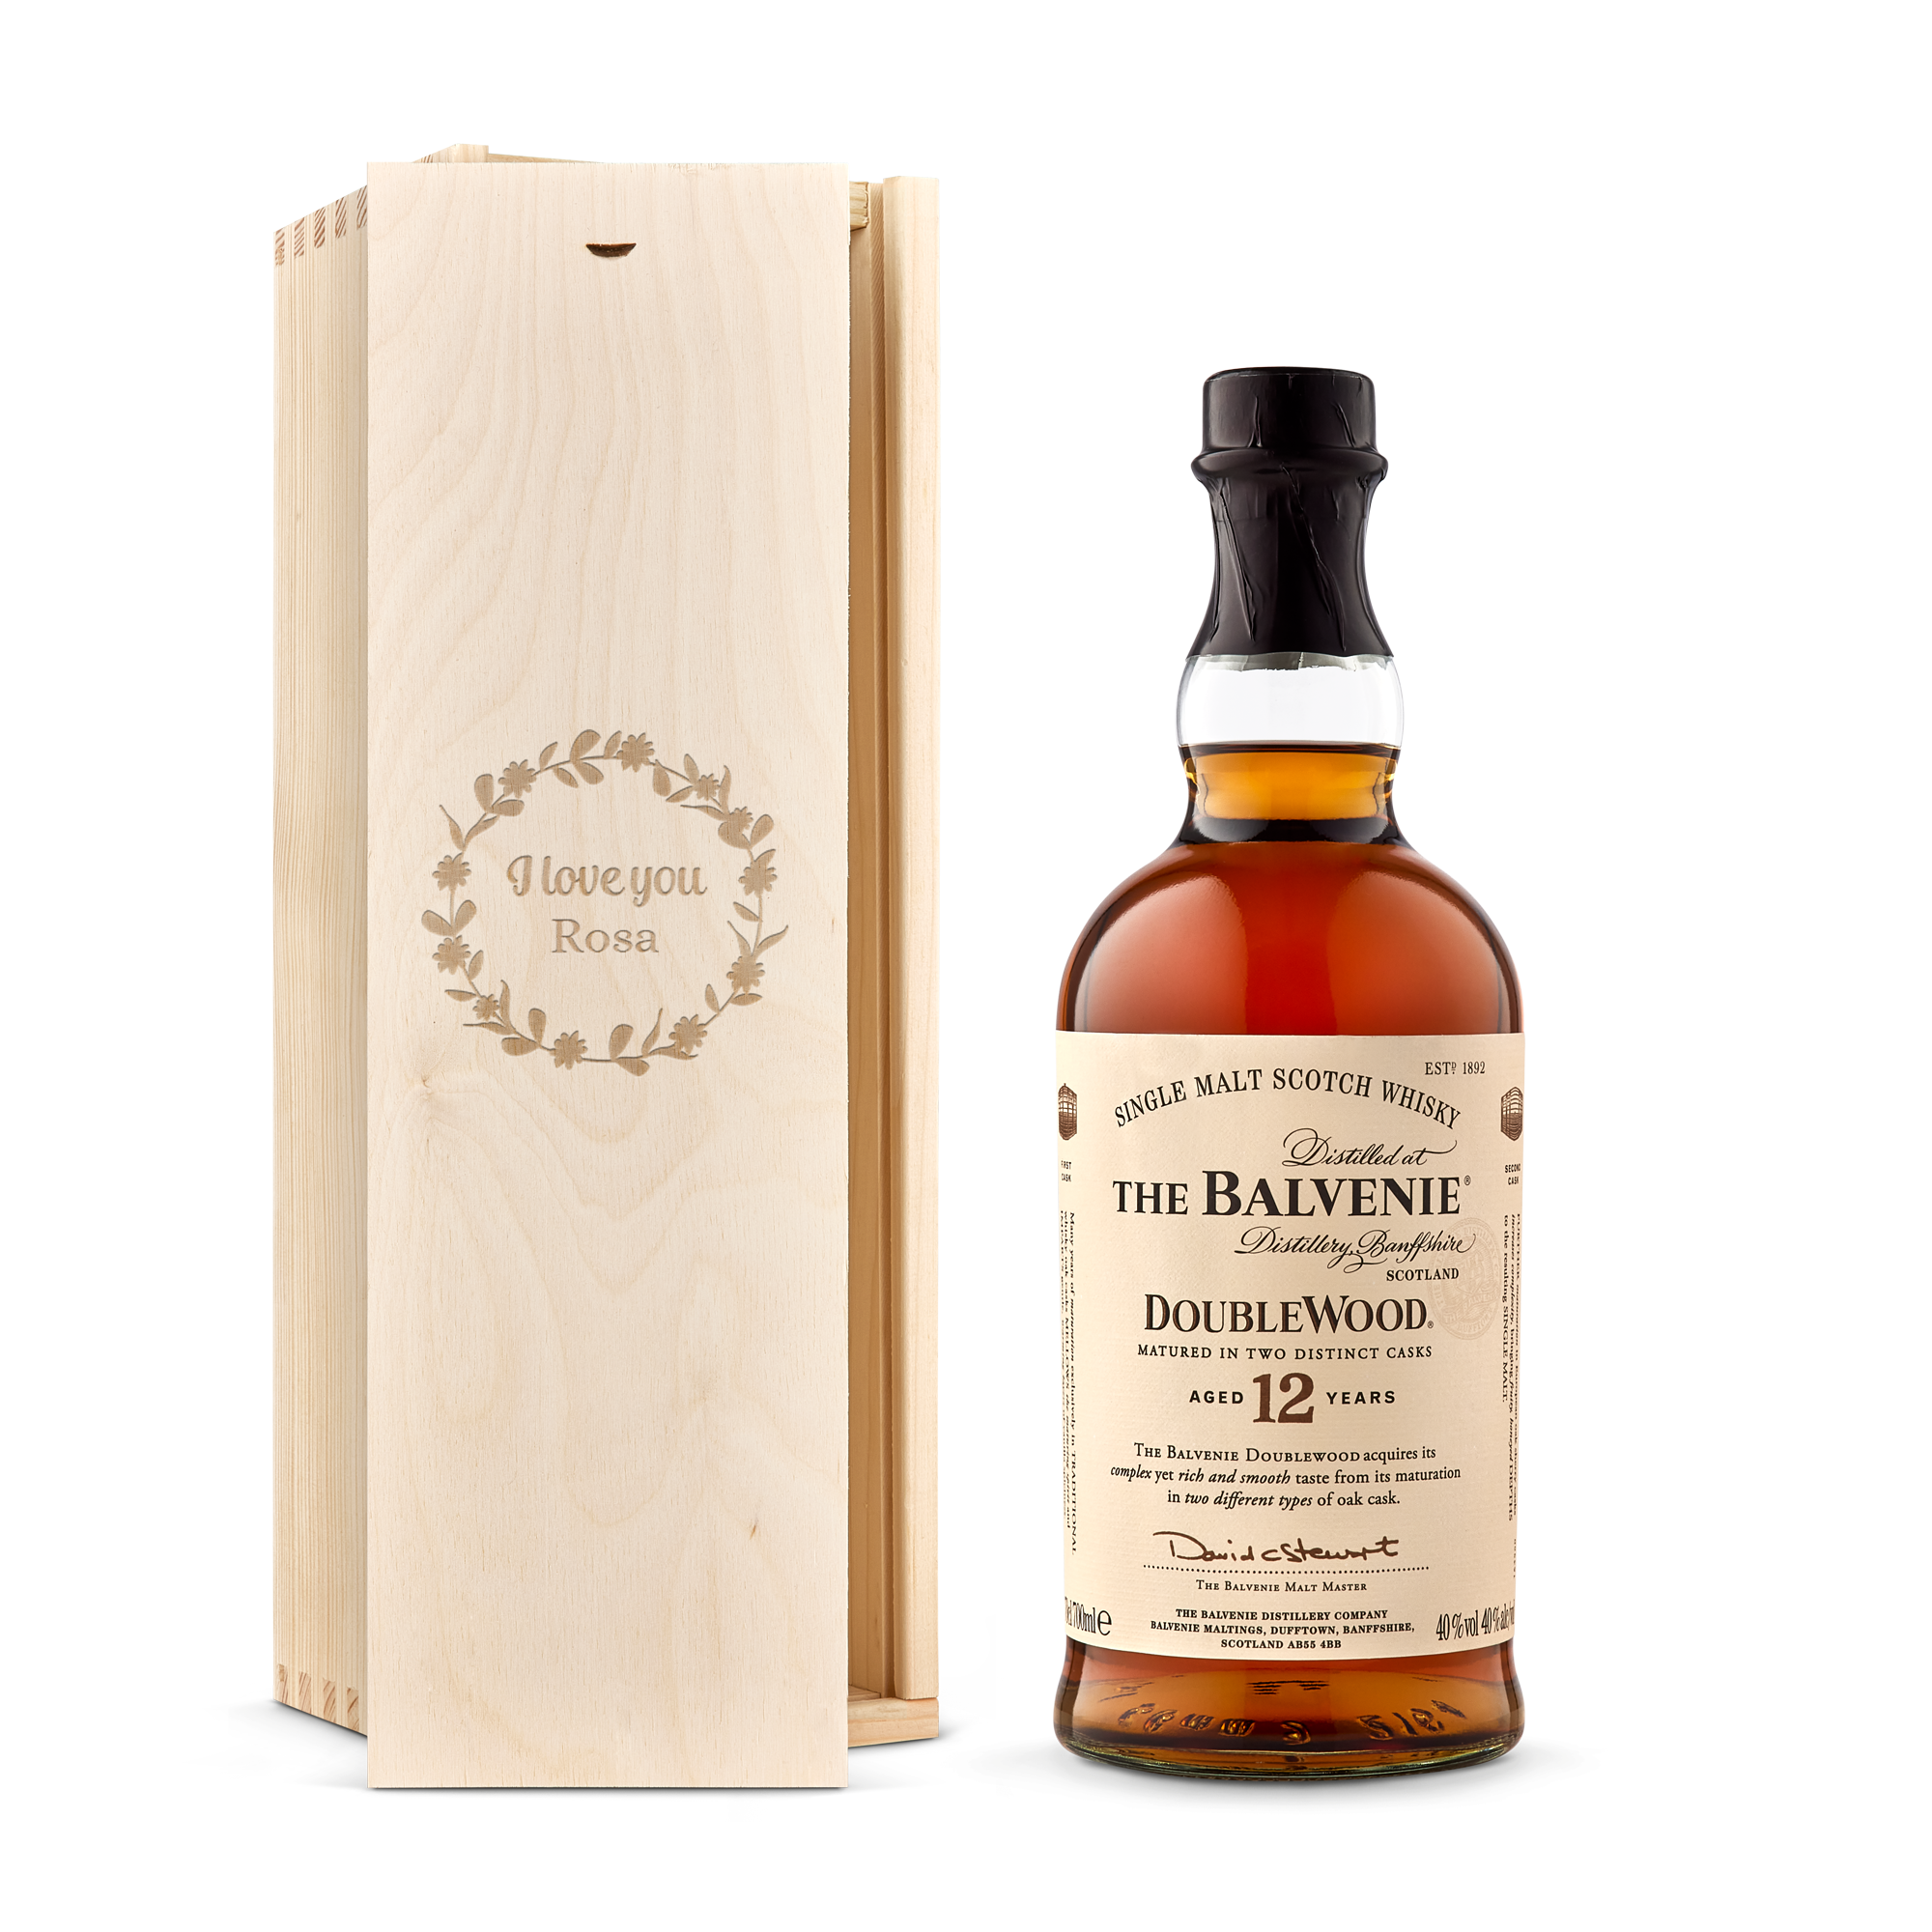 El whisky de Balvenie